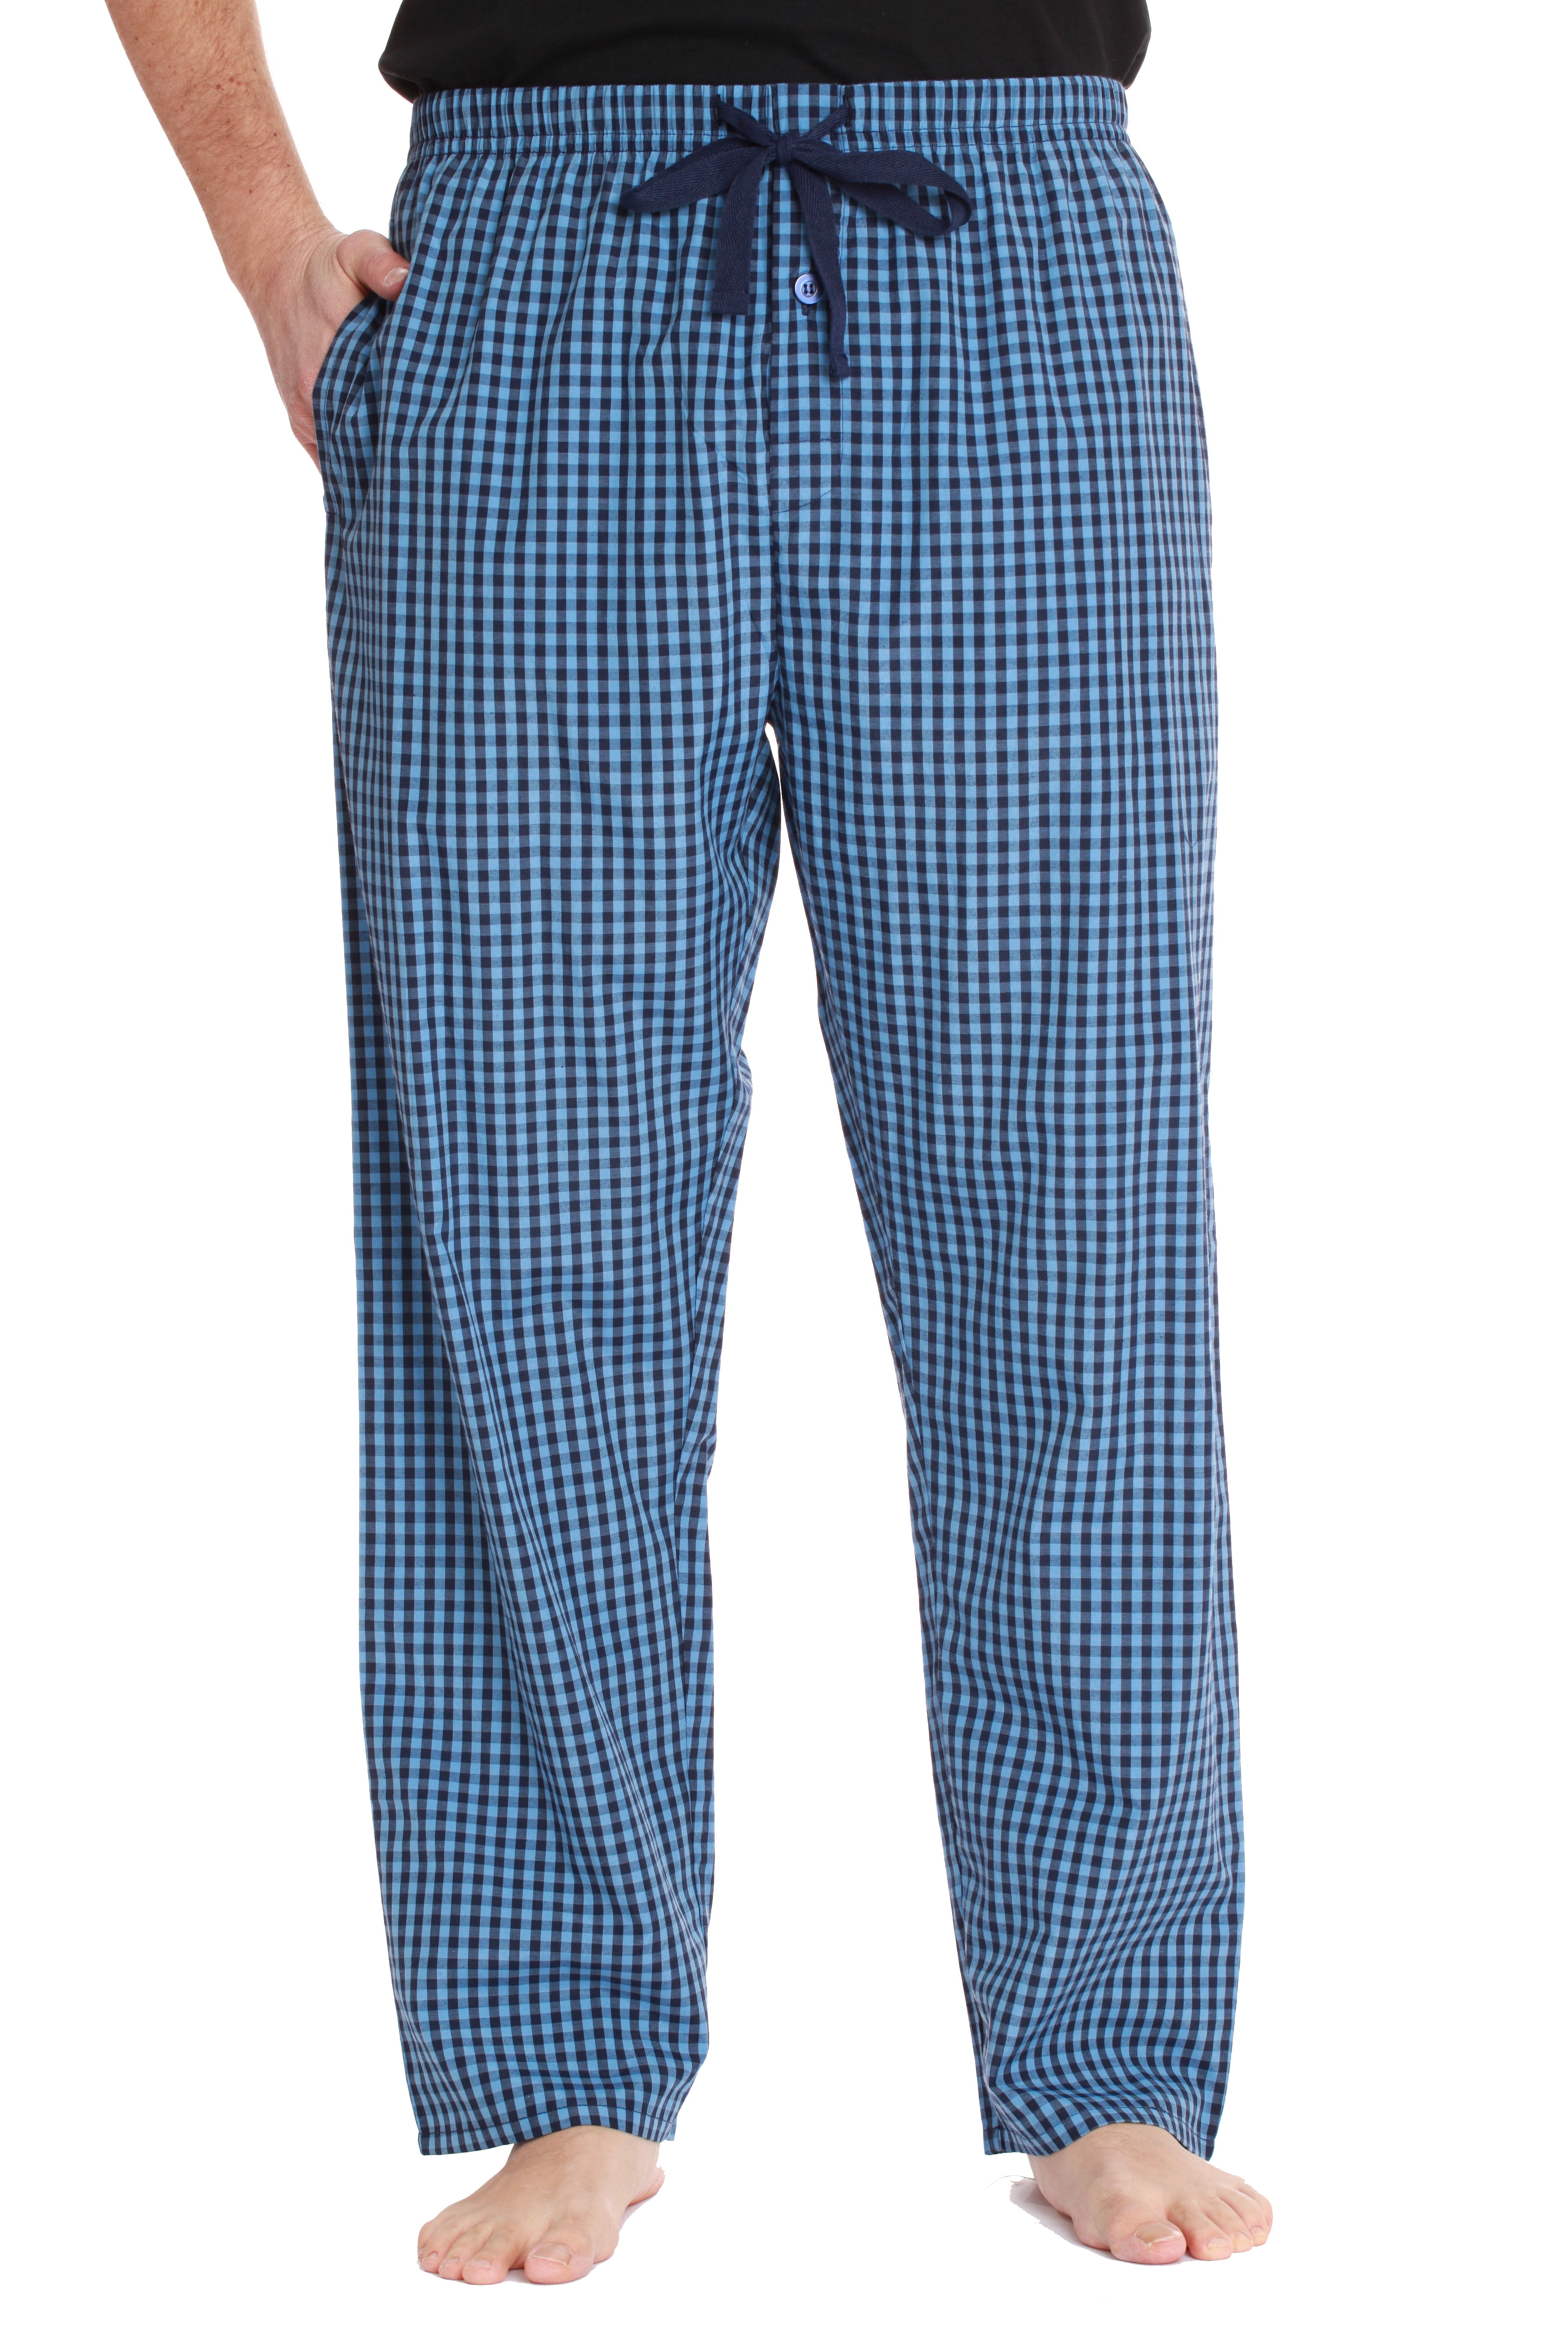 Followme - #followme Mens Plaid Poplin Pajama Pants with Pockets (XX ...